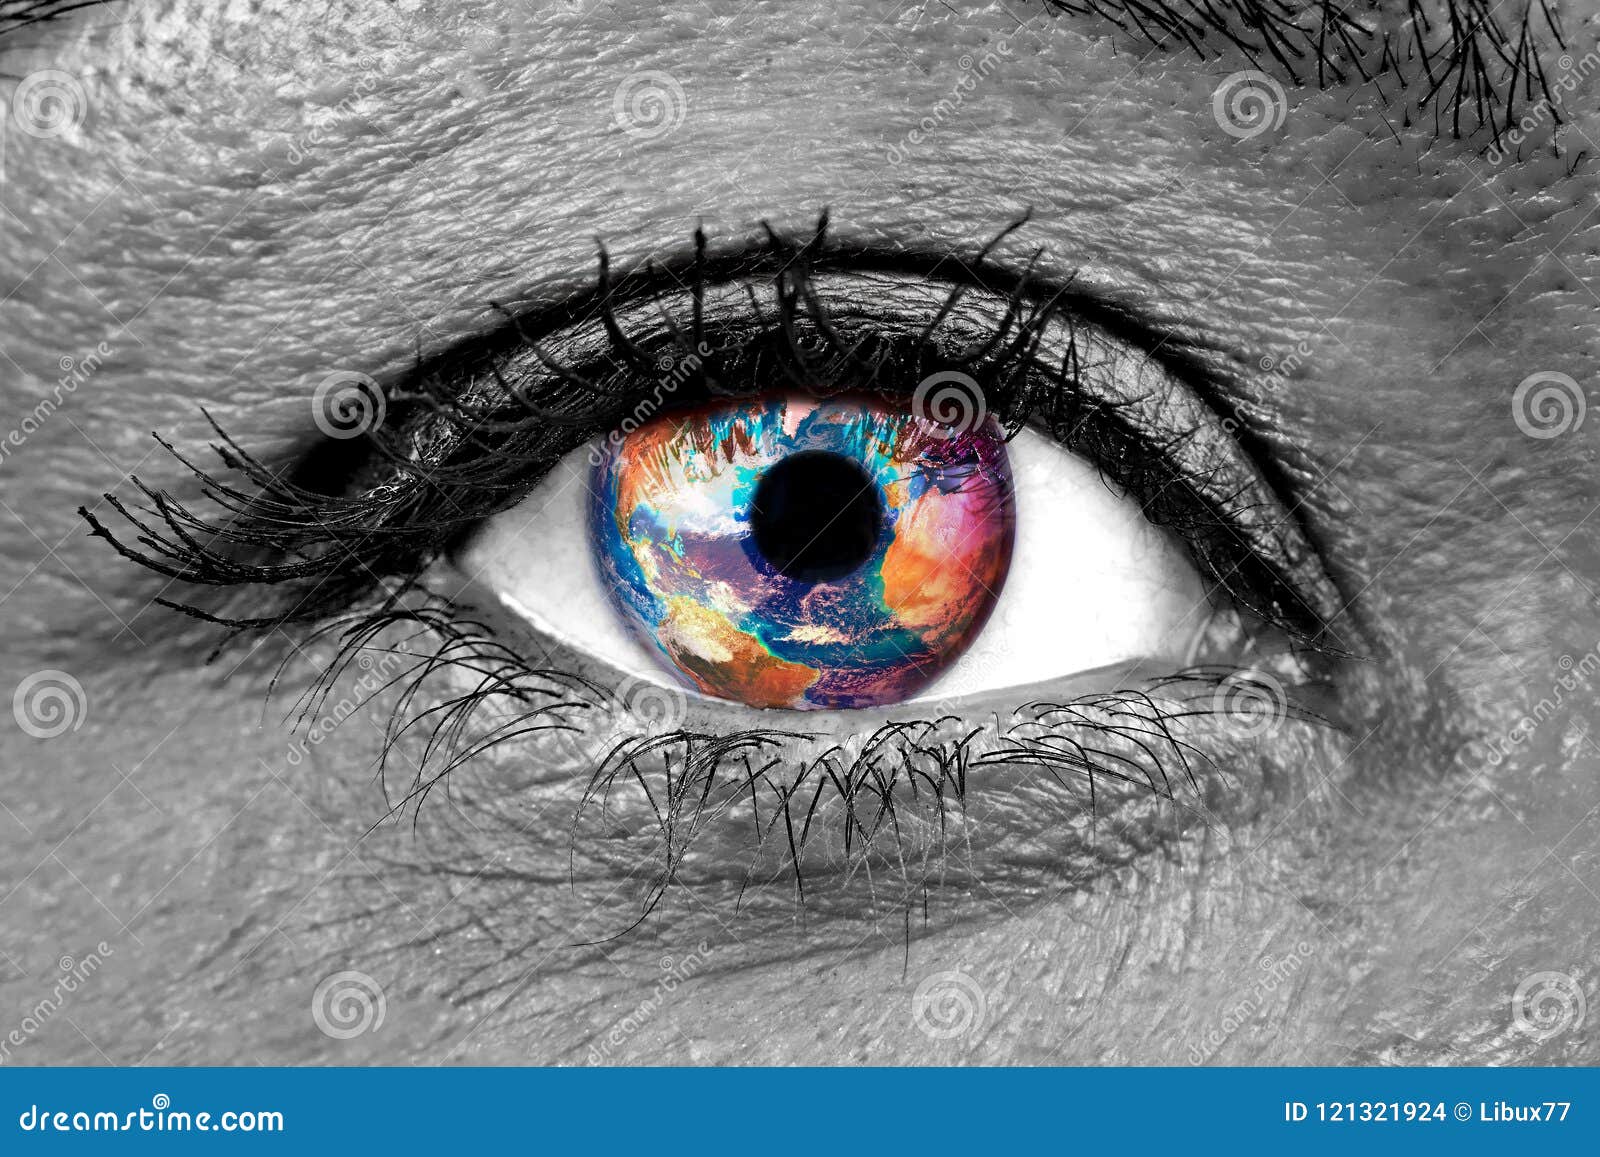 female human eye closeup with earth impressed on the iris